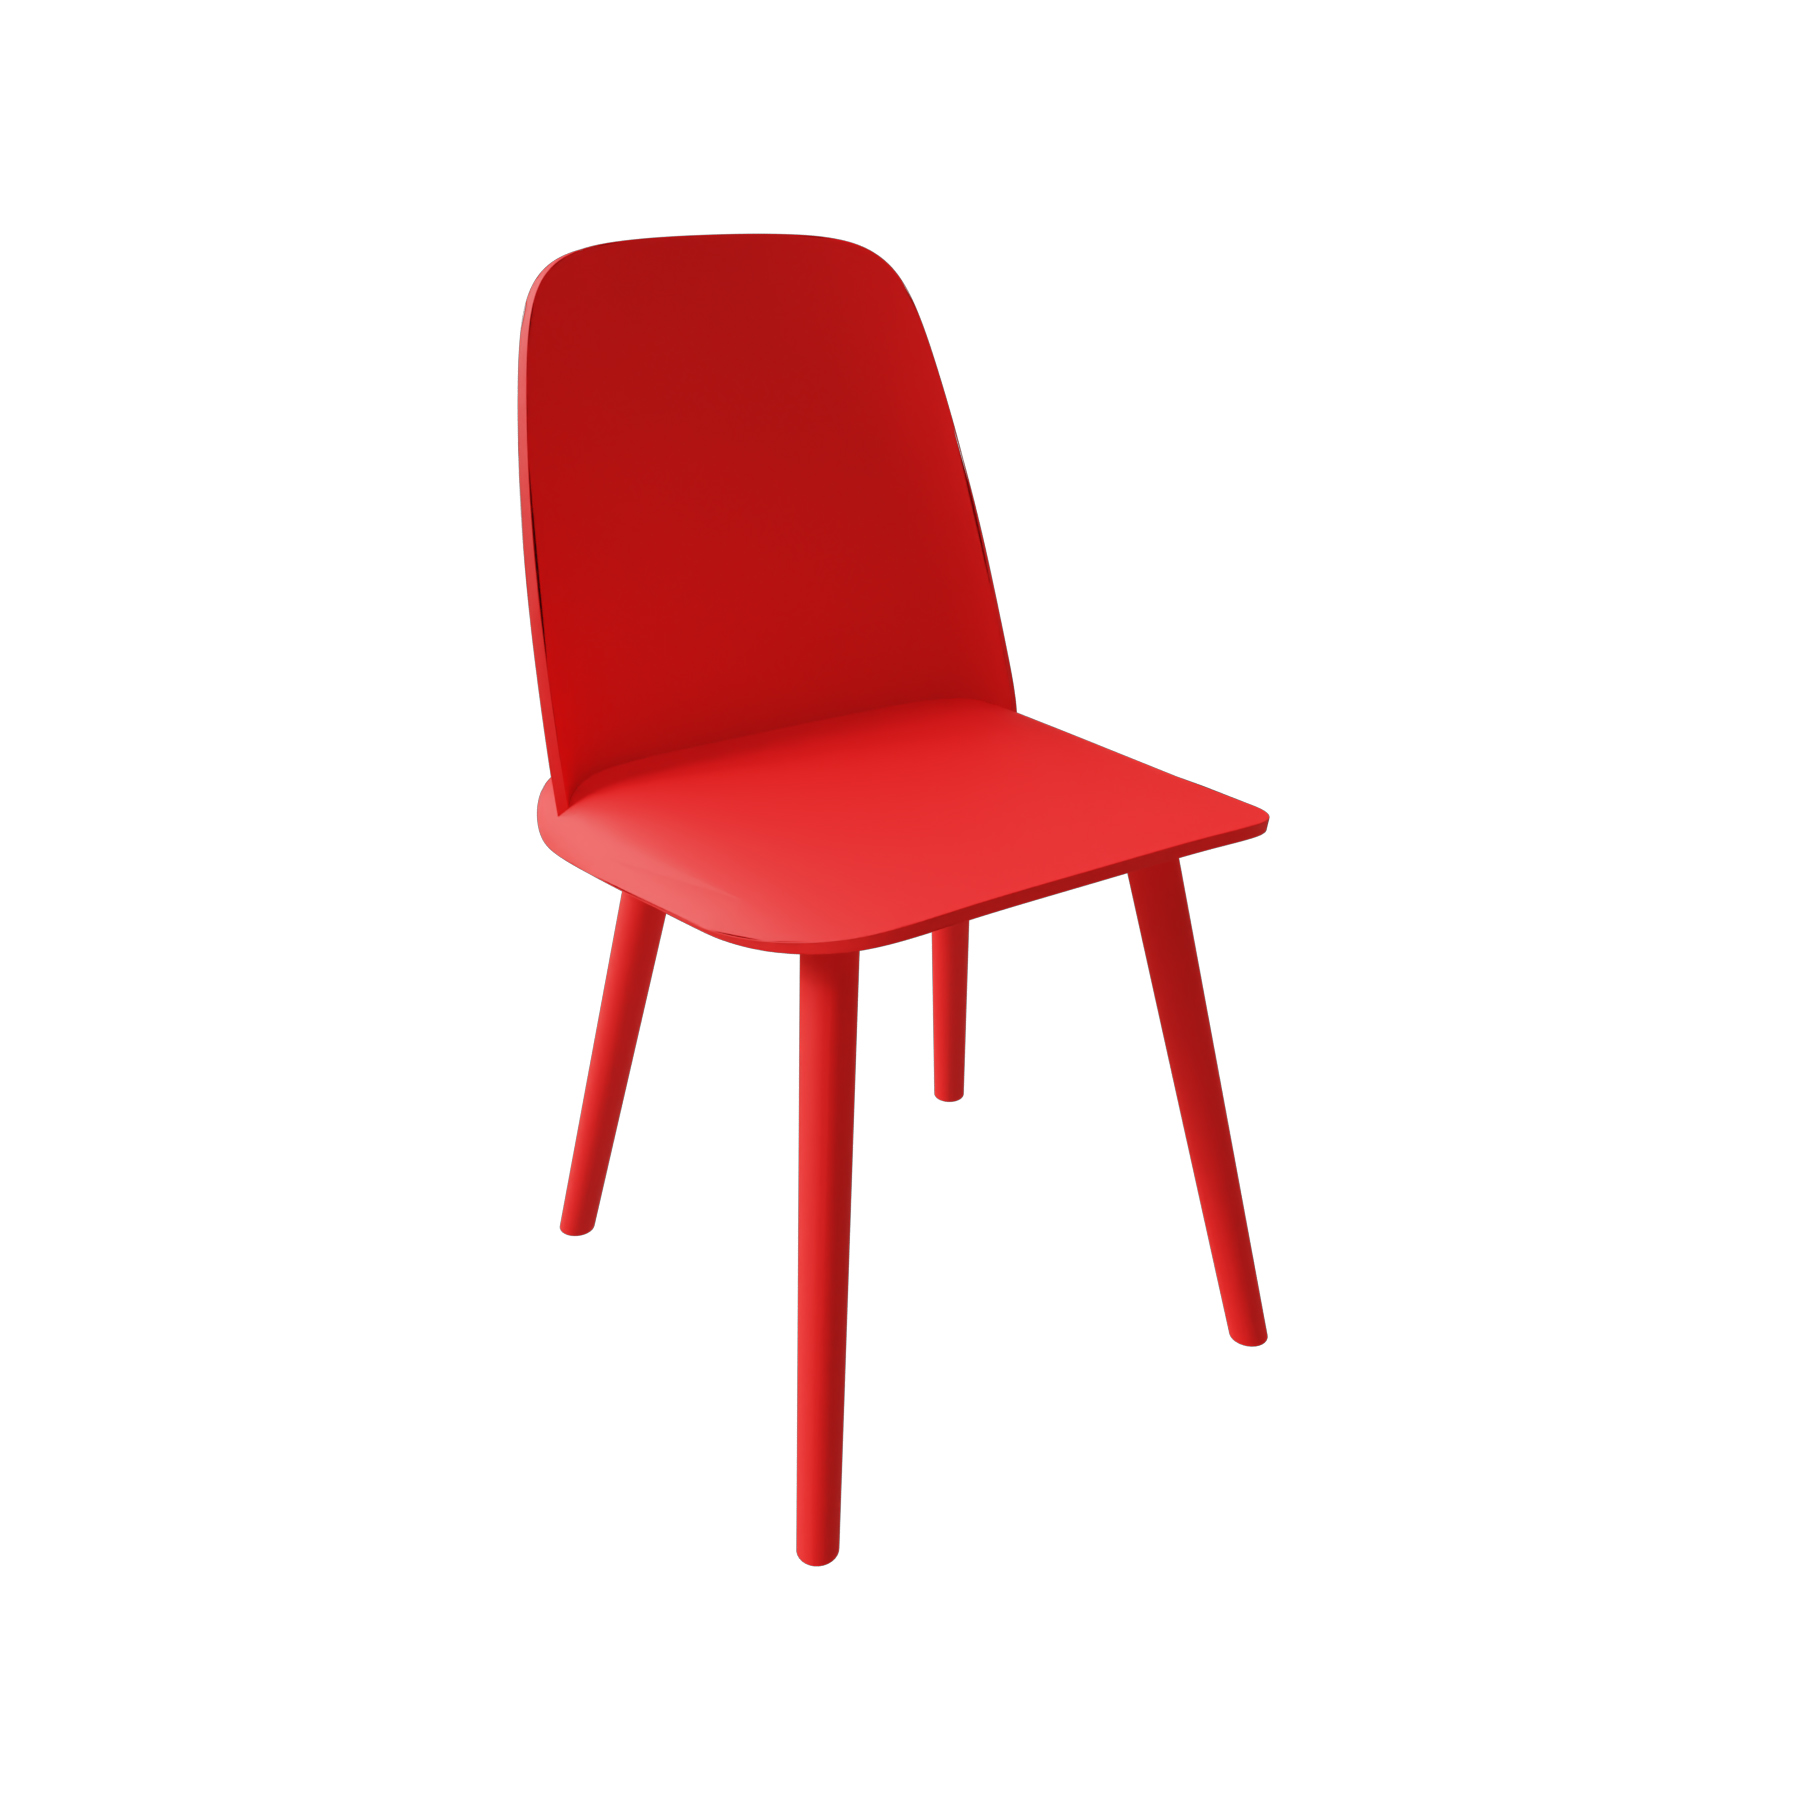 Nerd Chair - WoodBase 32010